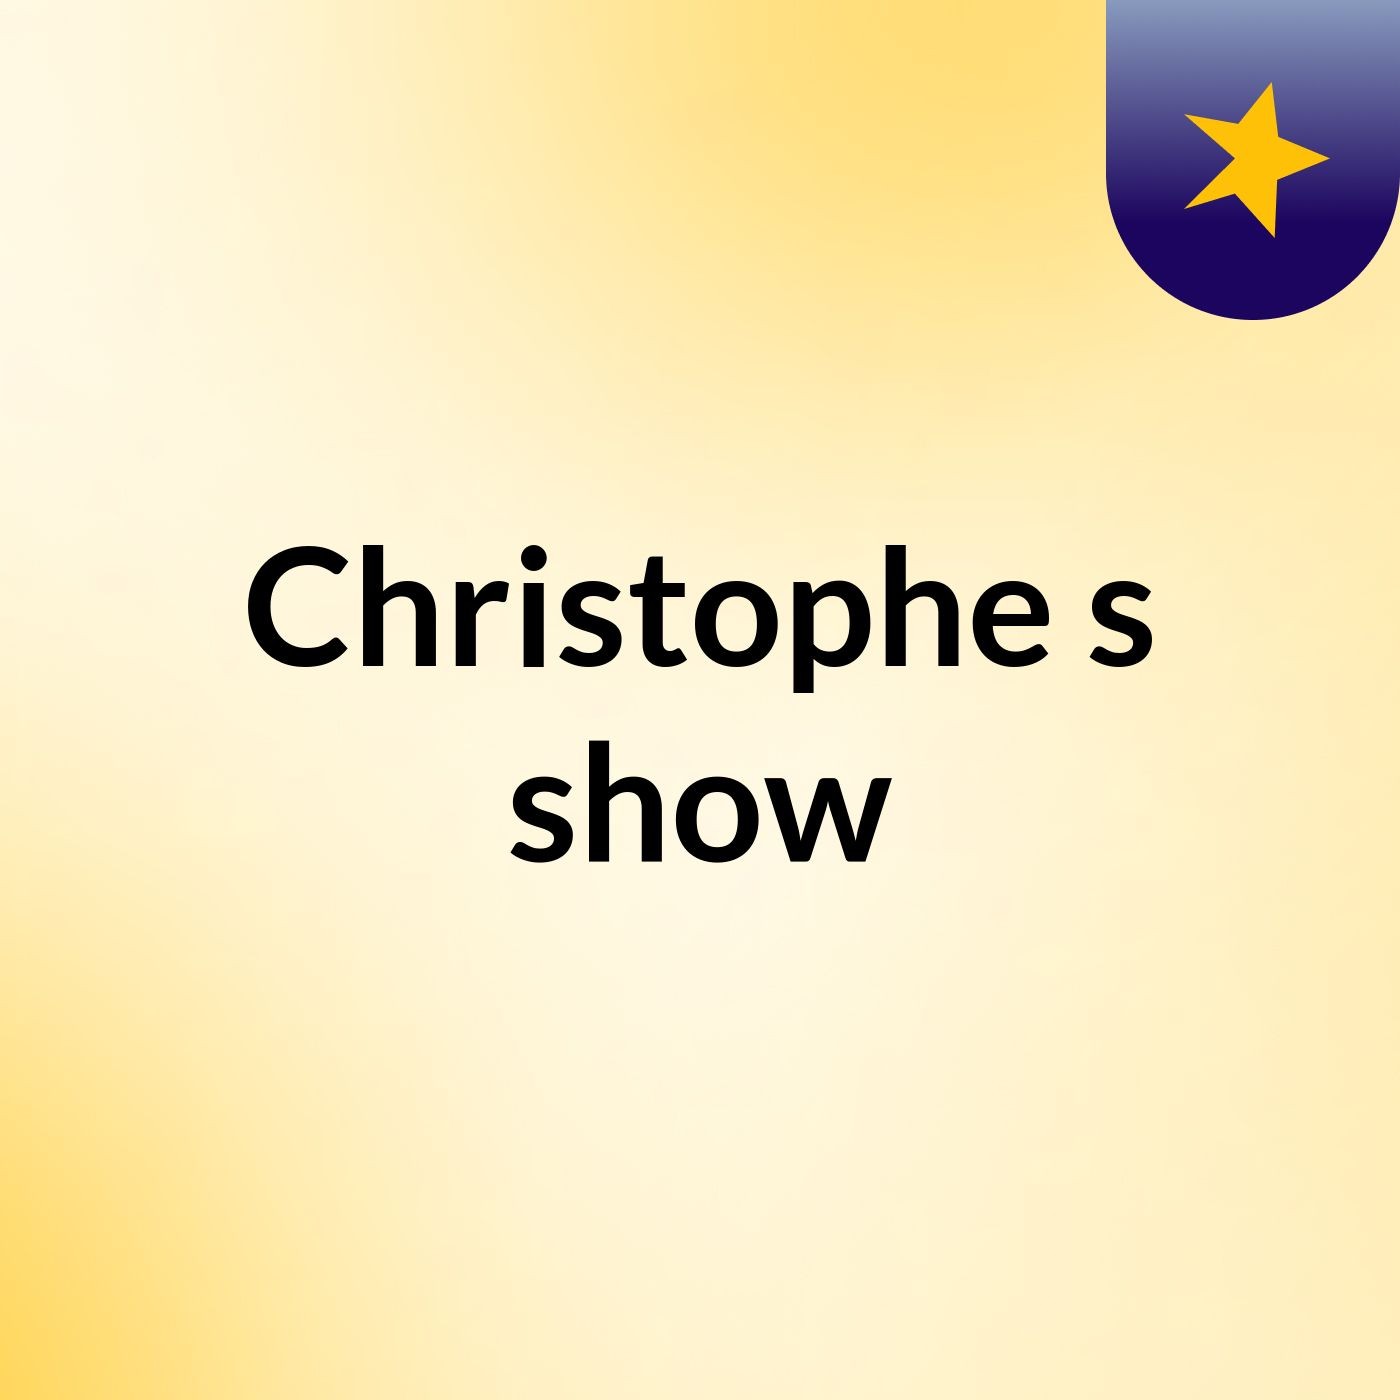 Christophe's show